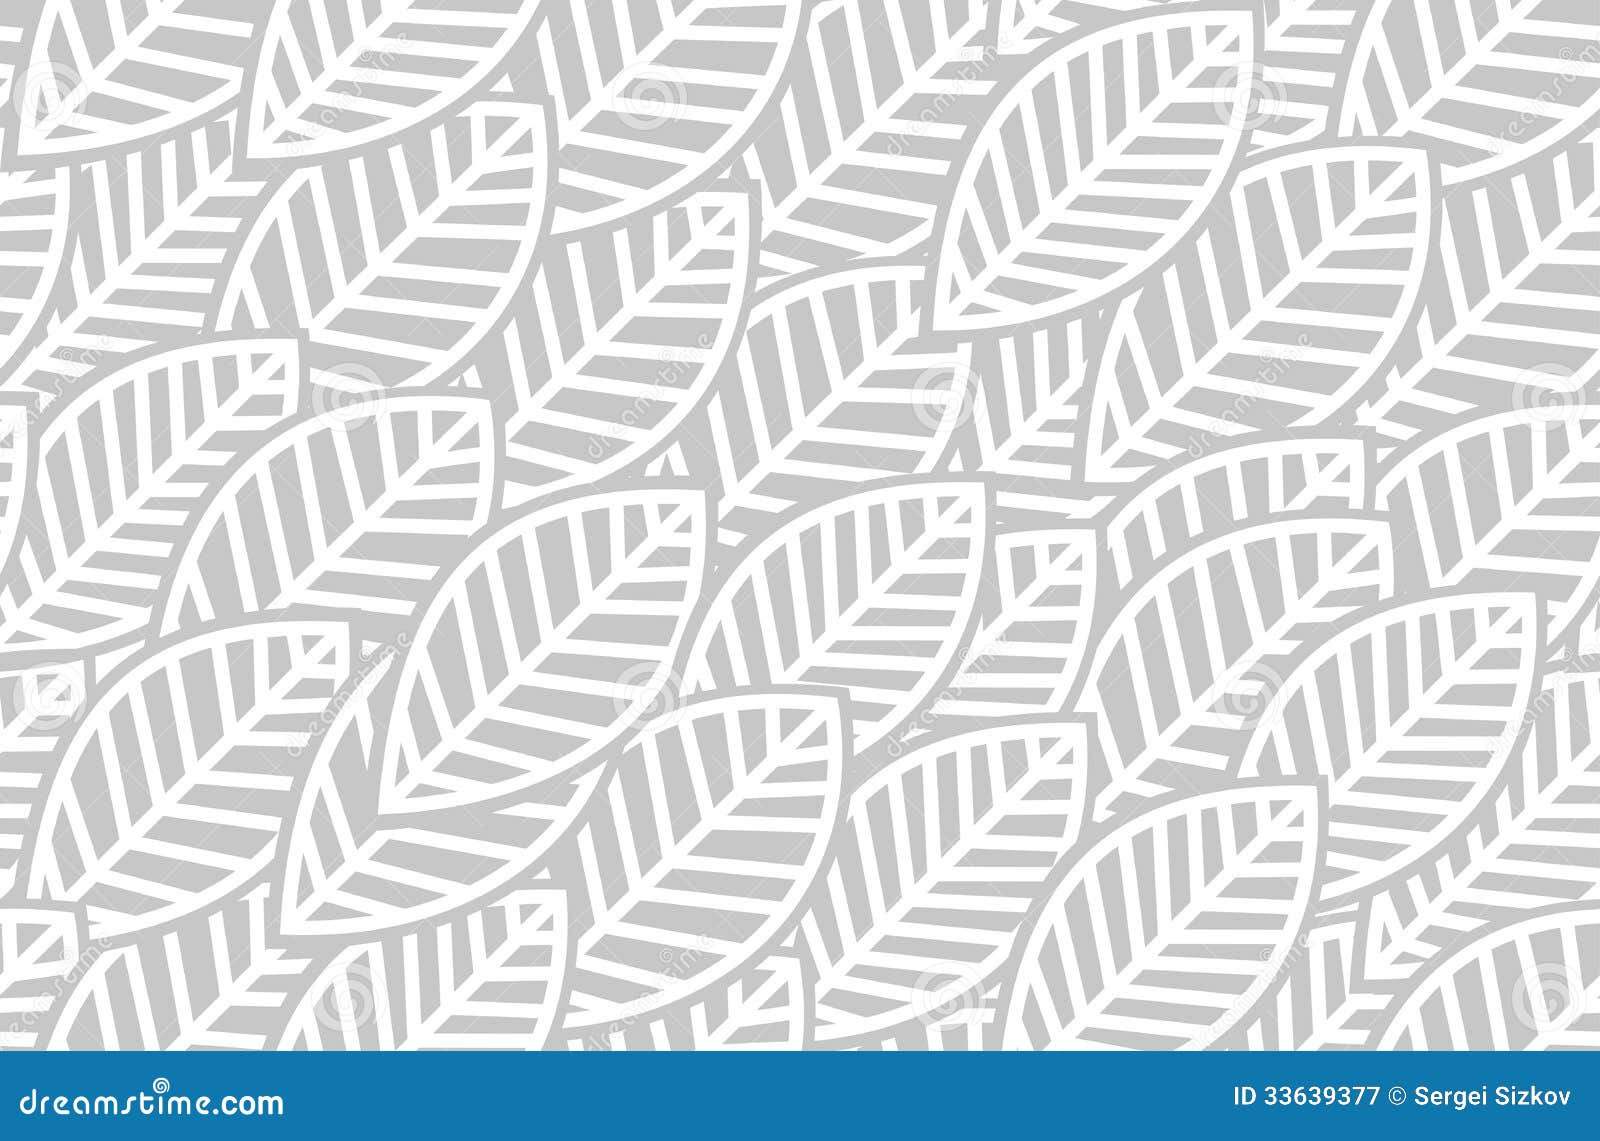 Download Leaves Background Pattern - Vector Illustration Stock ...